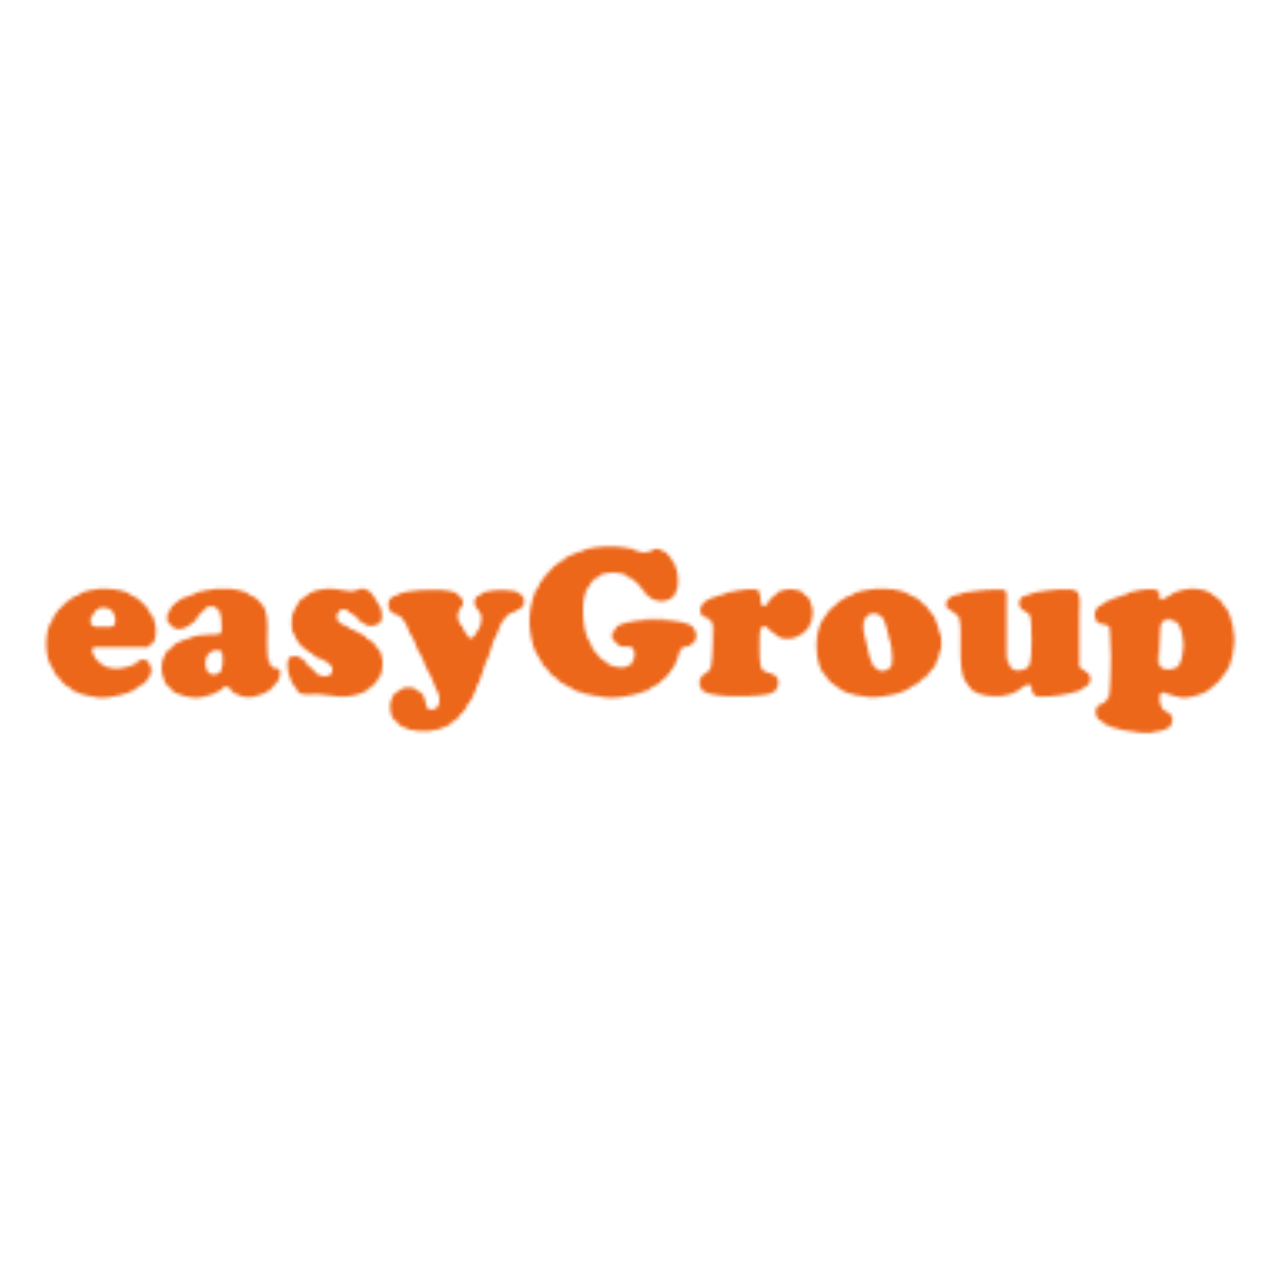 easygroup logo